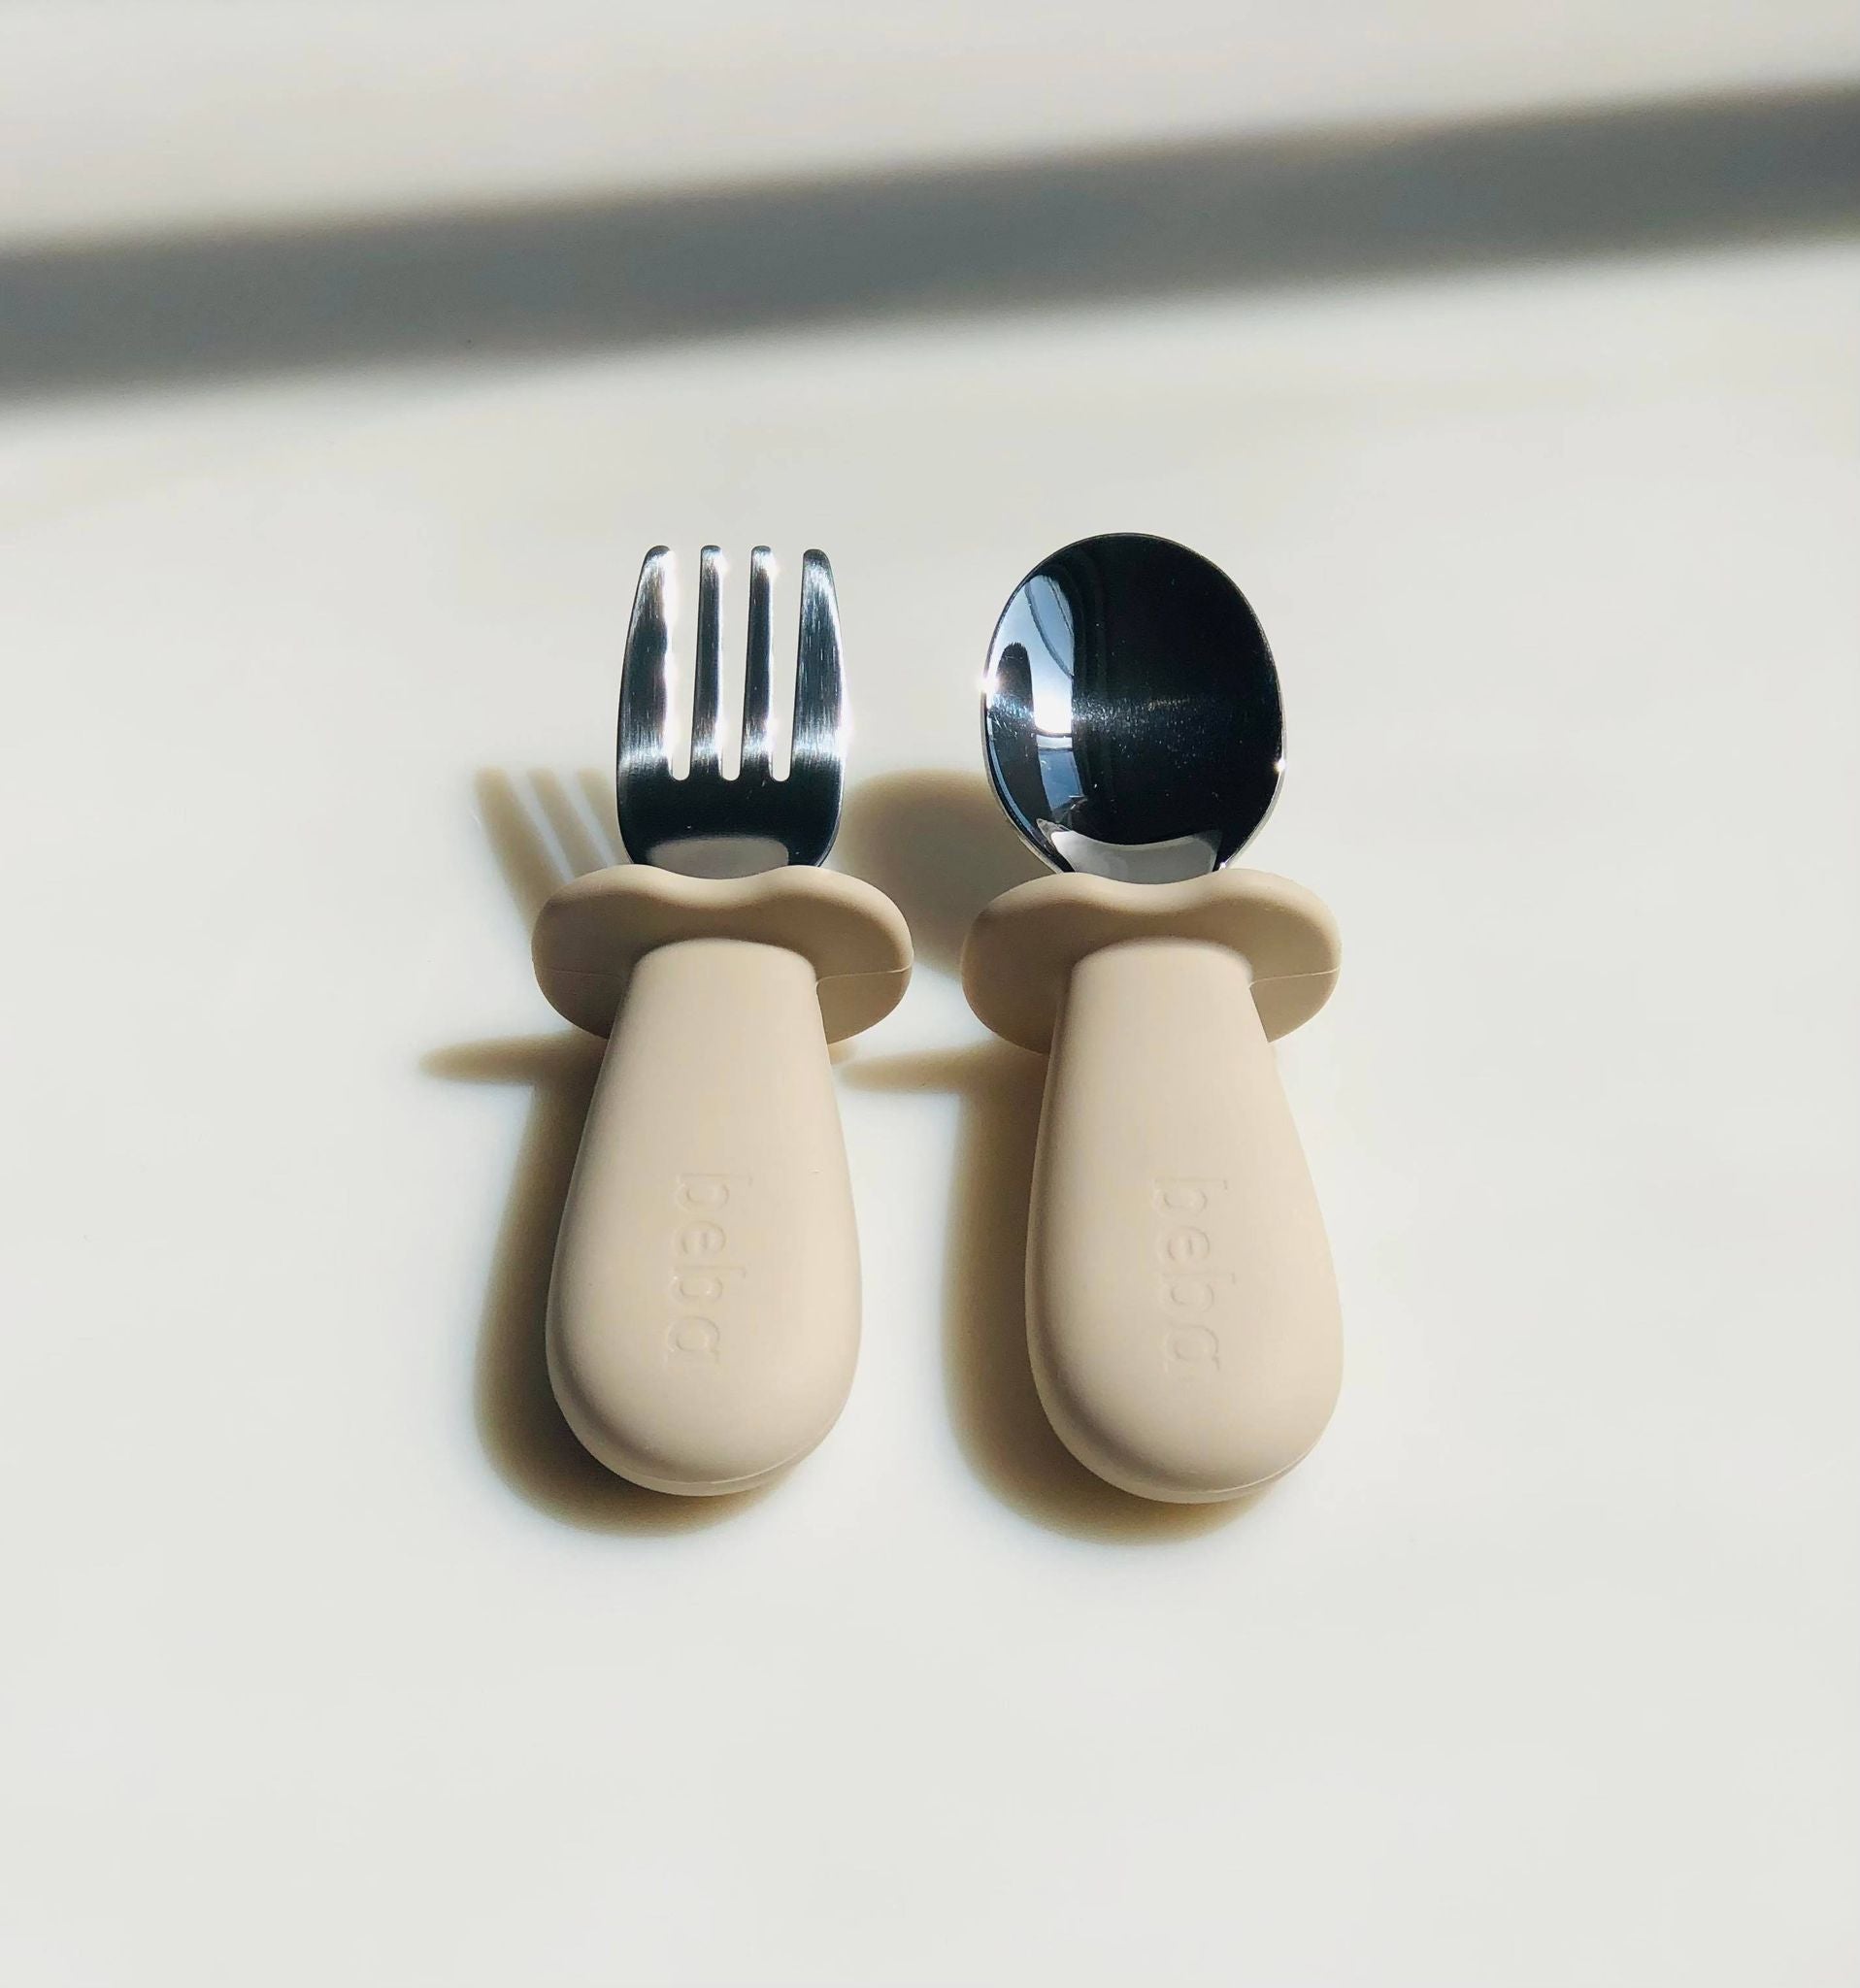 Toddler learning cutlery utensils - Beba Canada